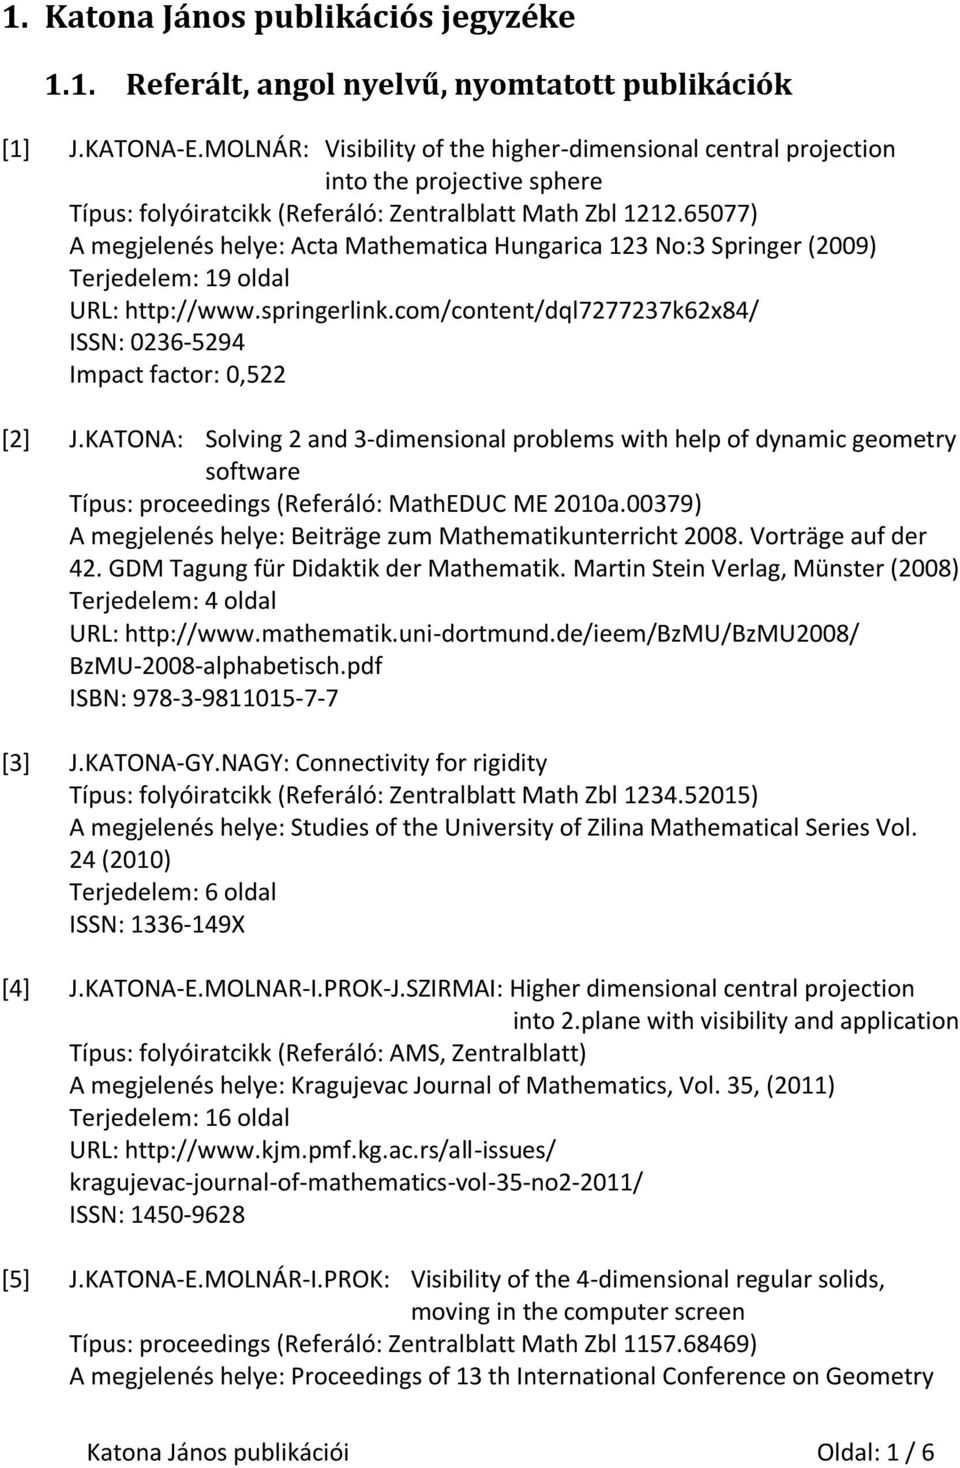 65077) A megjelenés helye: Acta Mathematica Hungarica 123 No:3 Springer (2009) Terjedelem: 19 oldal URL: http://www.springerlink.